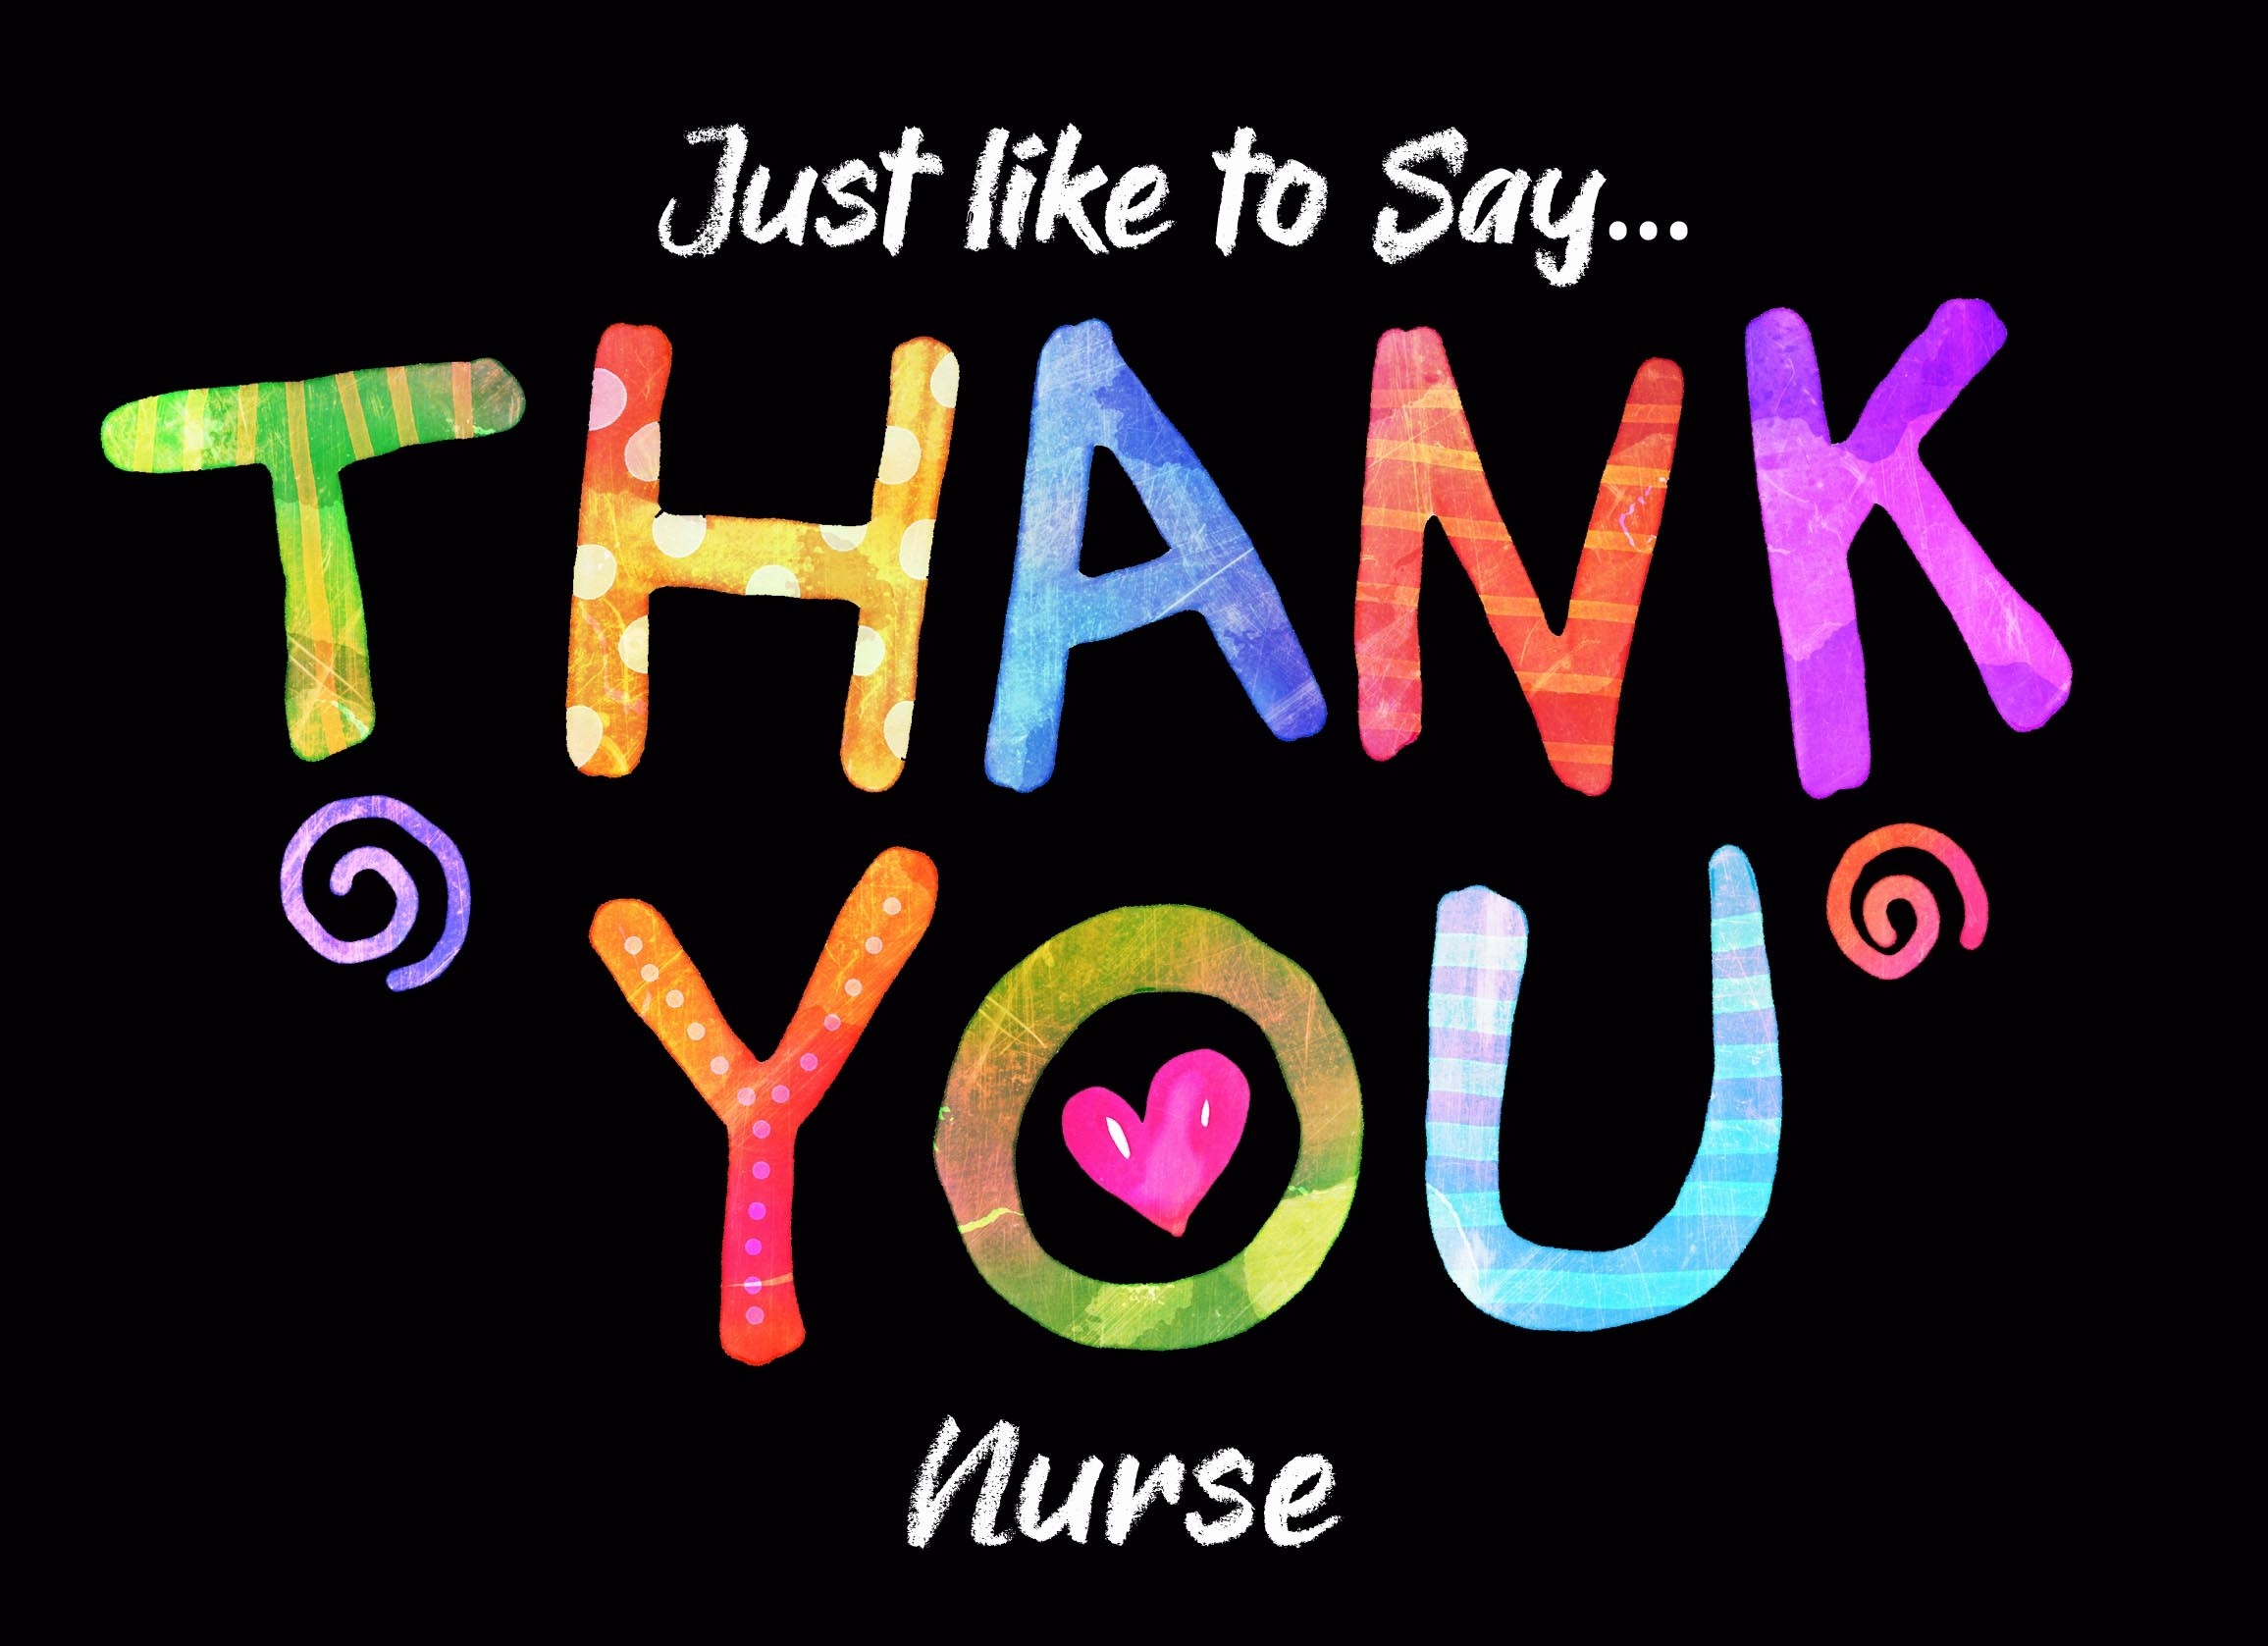 Thank You 'Nurse' Greeting Card